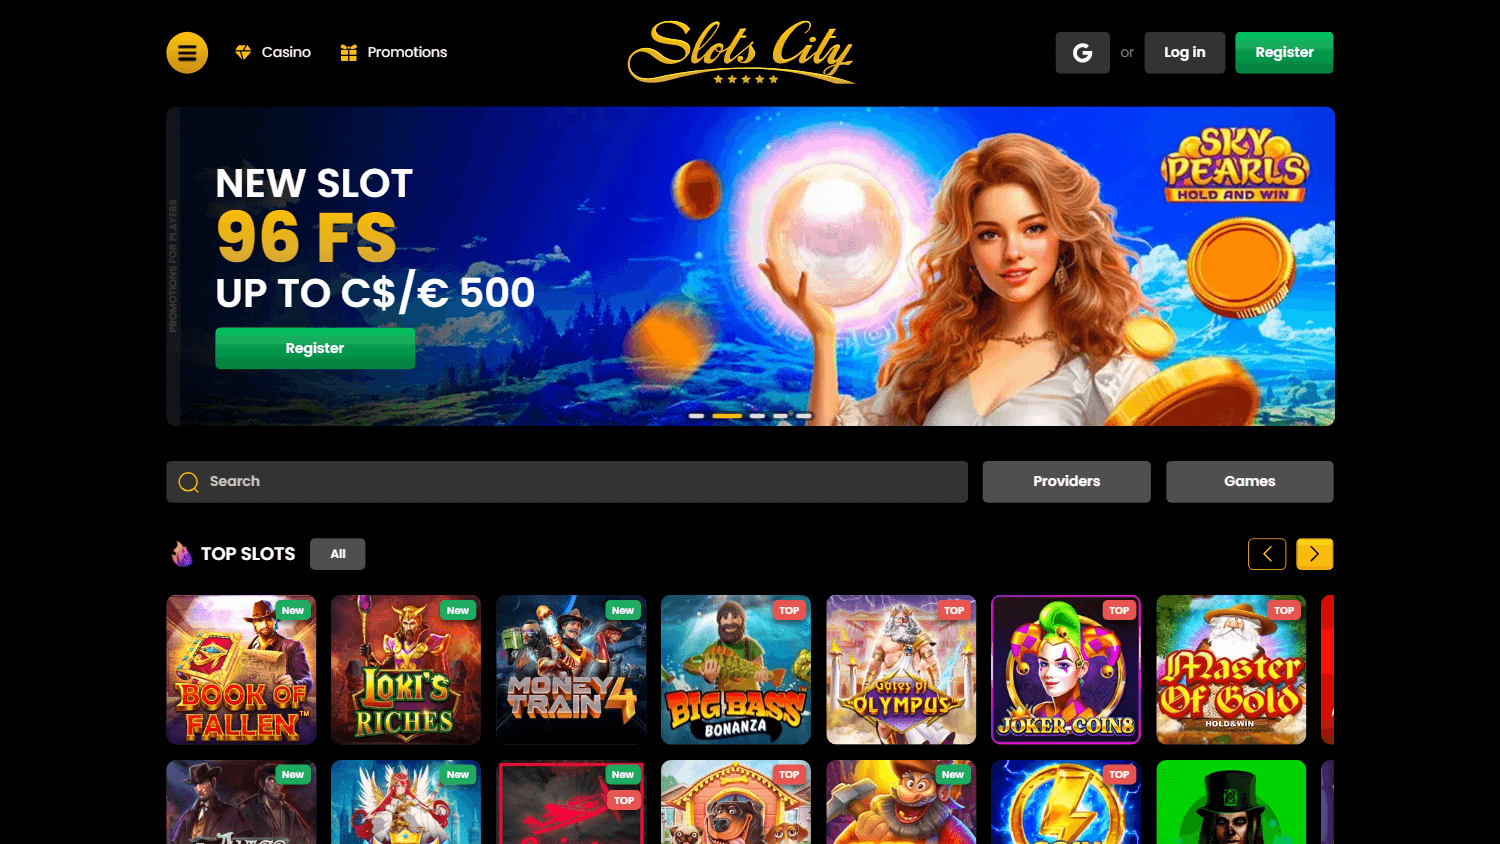 slots_city_casino_homepage_desktop